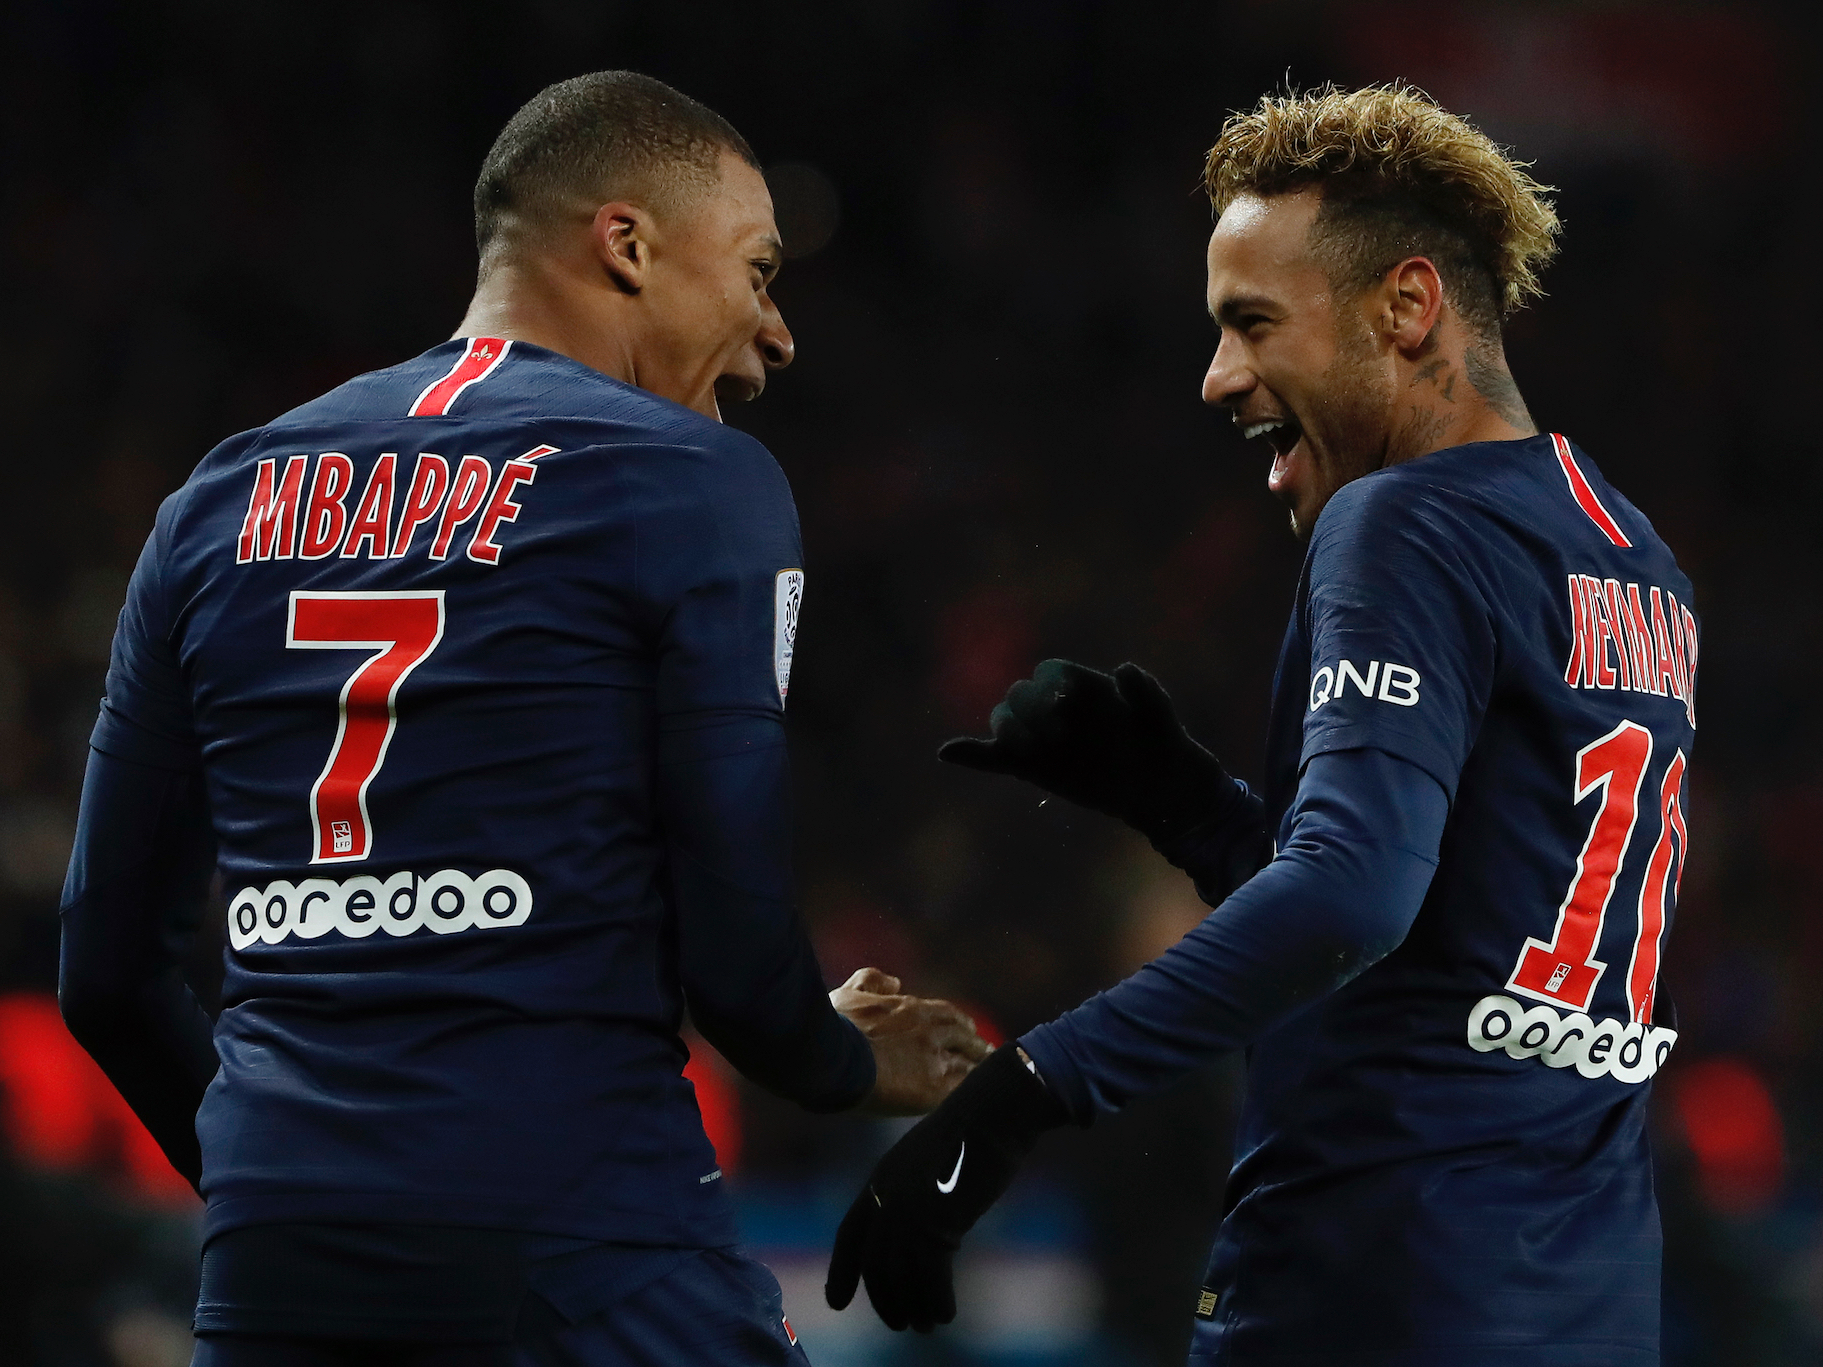 Paris-Saint Germain face off against the defending-champions Bayern Munich